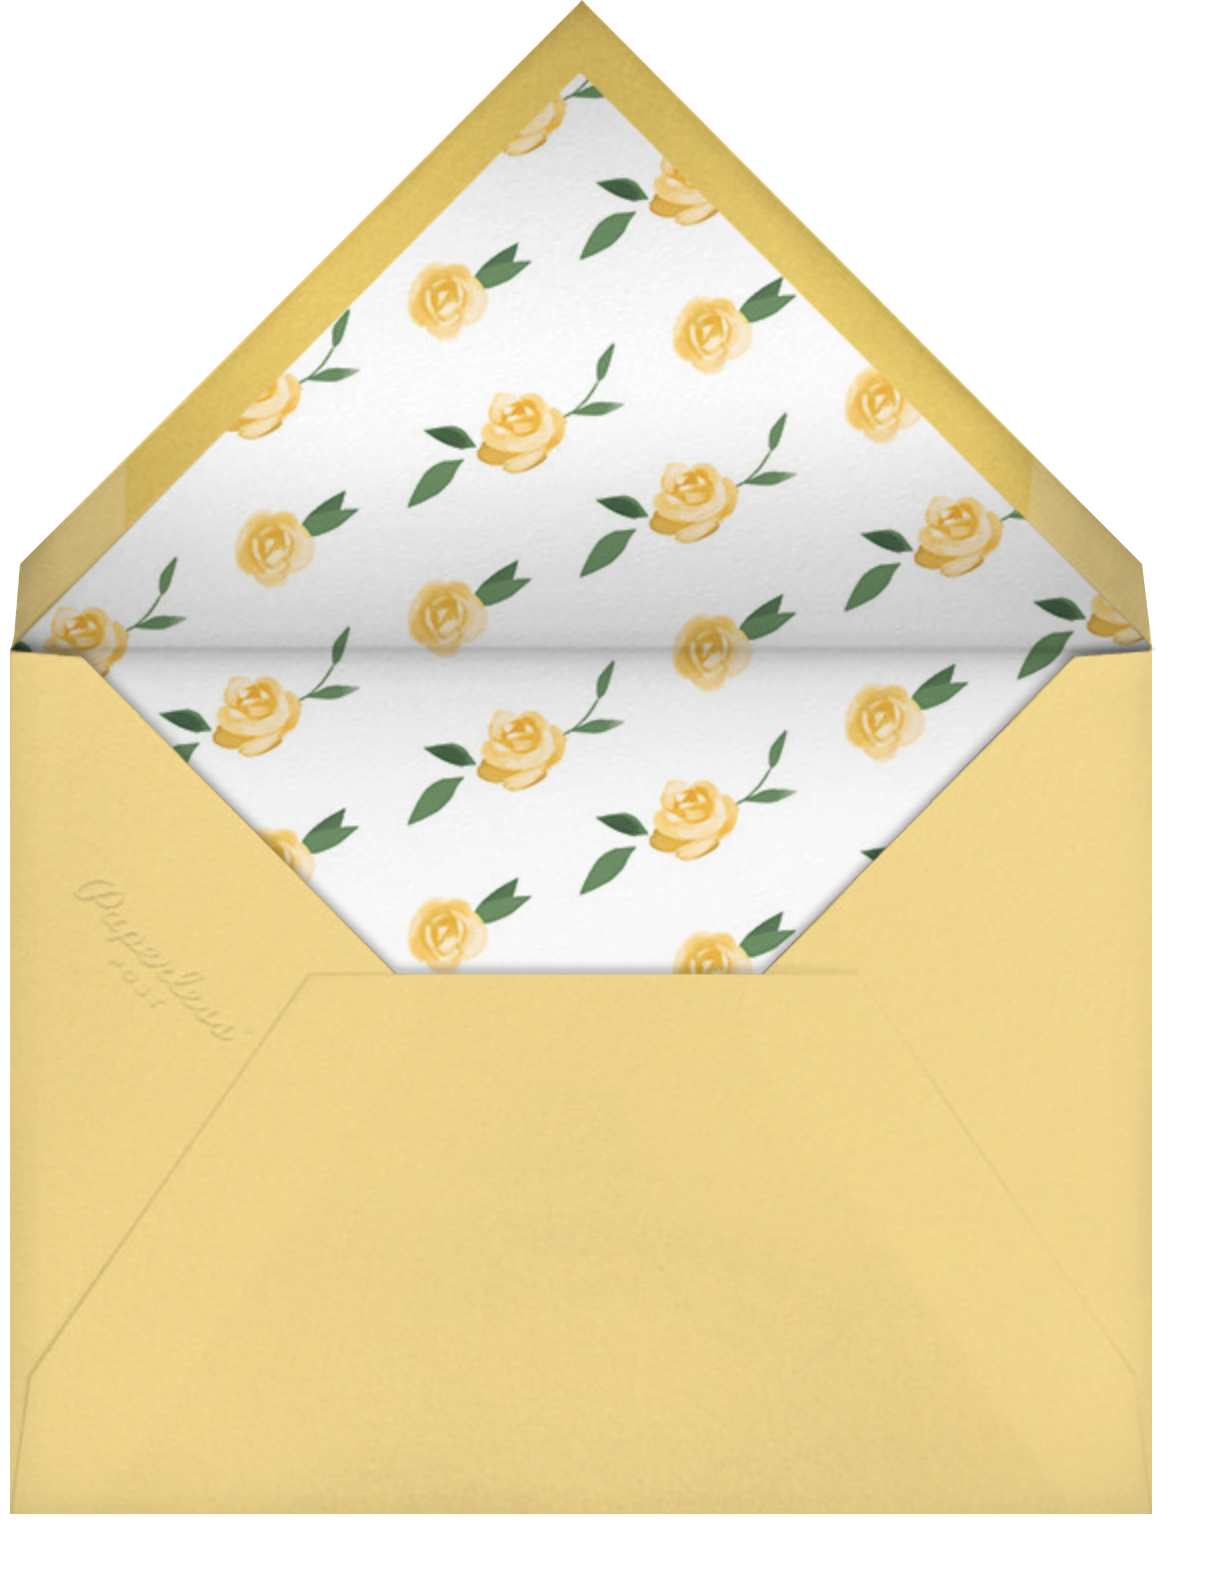 Teablossom (Photo Invitation) - Gold/Yellow - Paperless Post - Envelope